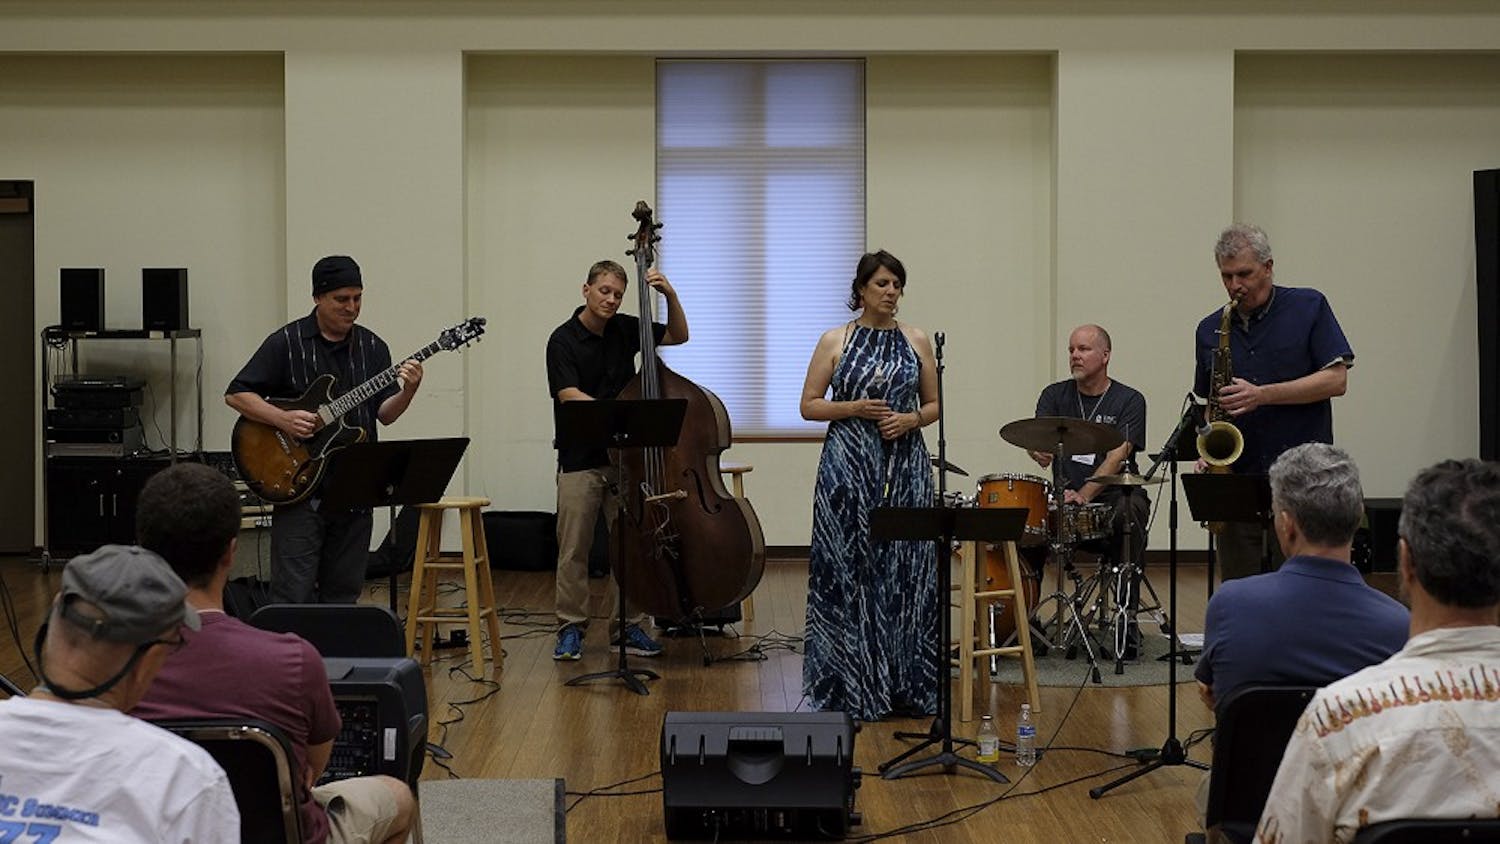 (From the left) Scott Sawyer, Jason Foureman, Kate McGarry, Dan Davis and Dave Finucane perform at the UNC Summer Jazz Workshop on Tuesday evening.